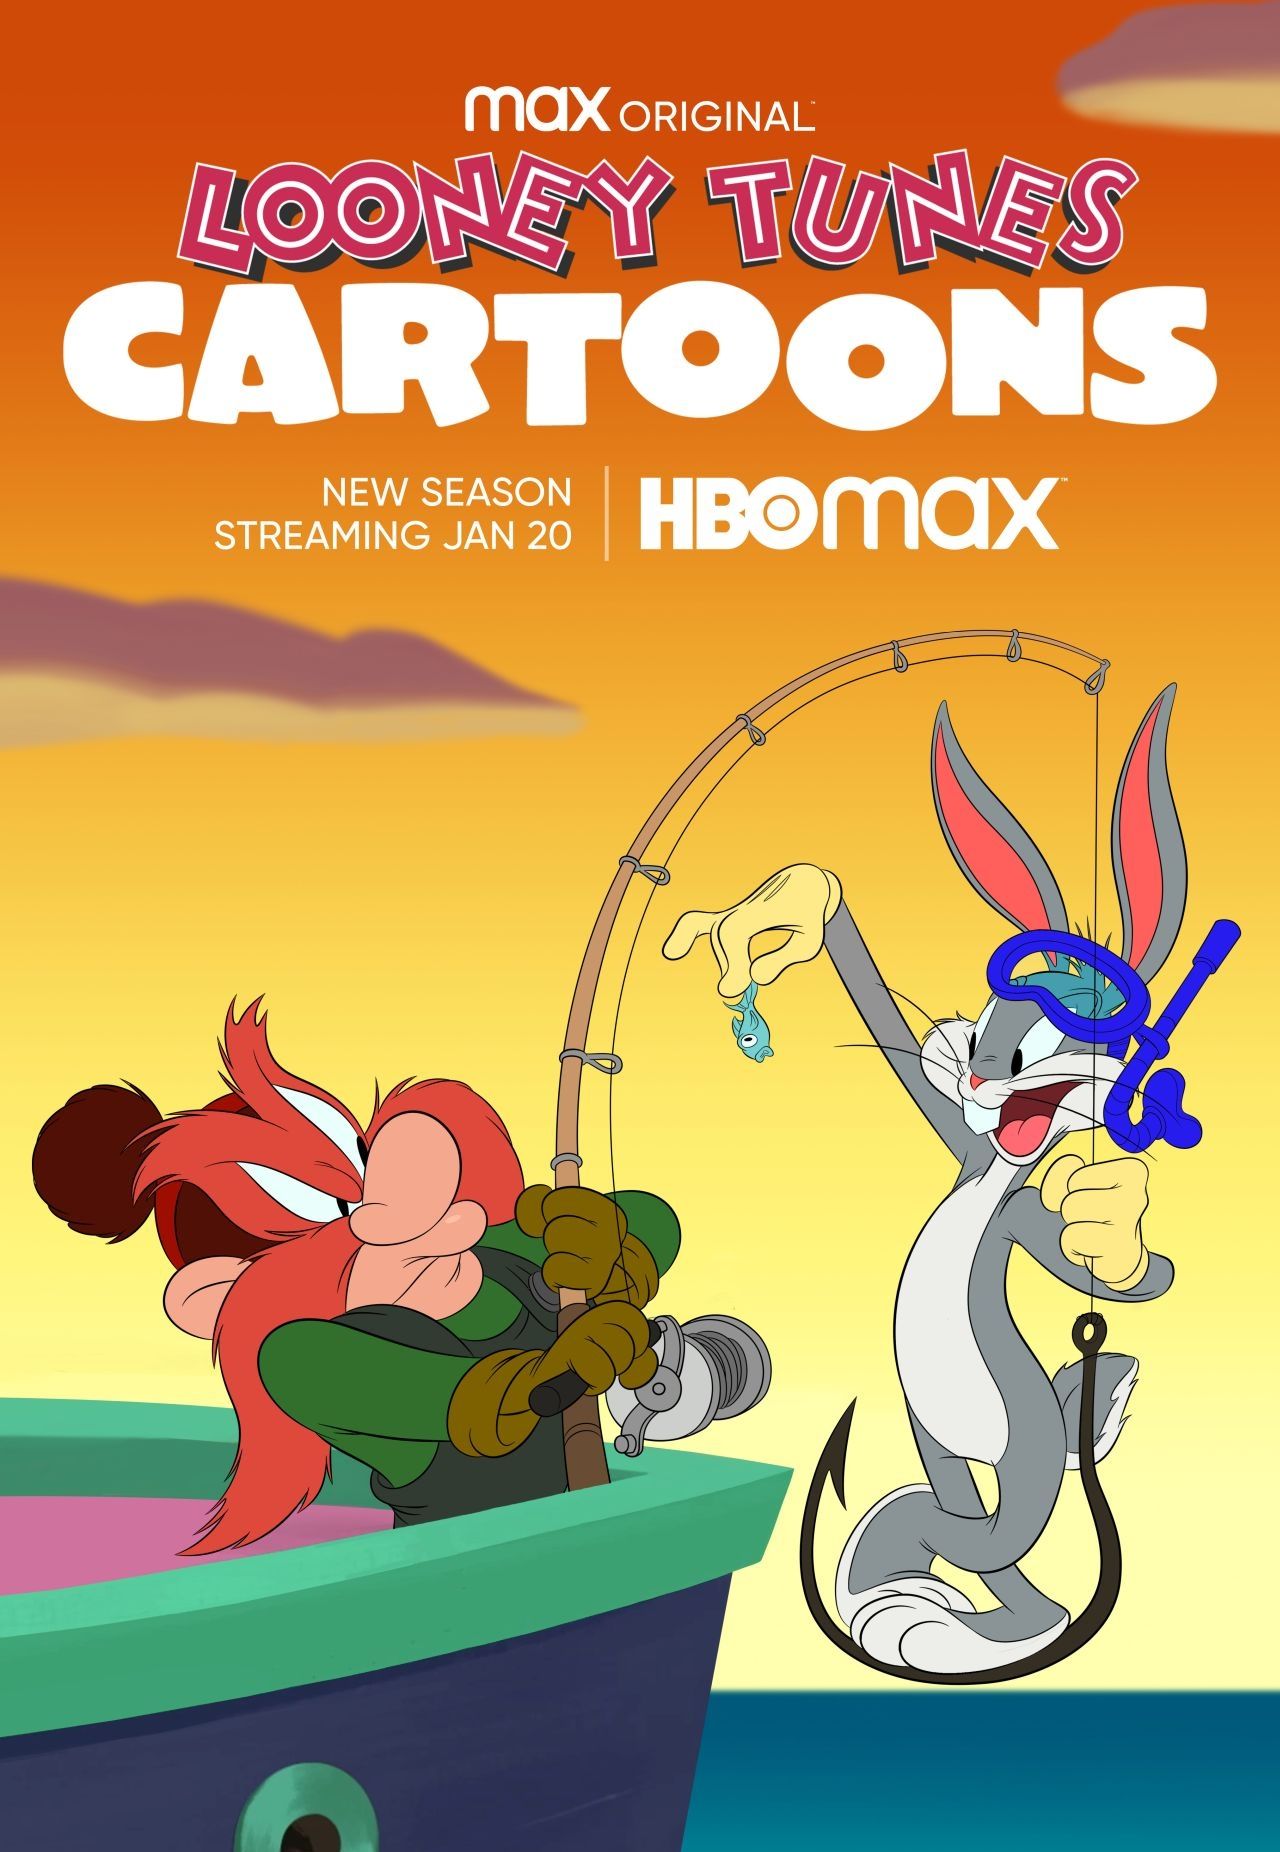 Is “Looney Tunes Cartoons Season 4” on HBO Max